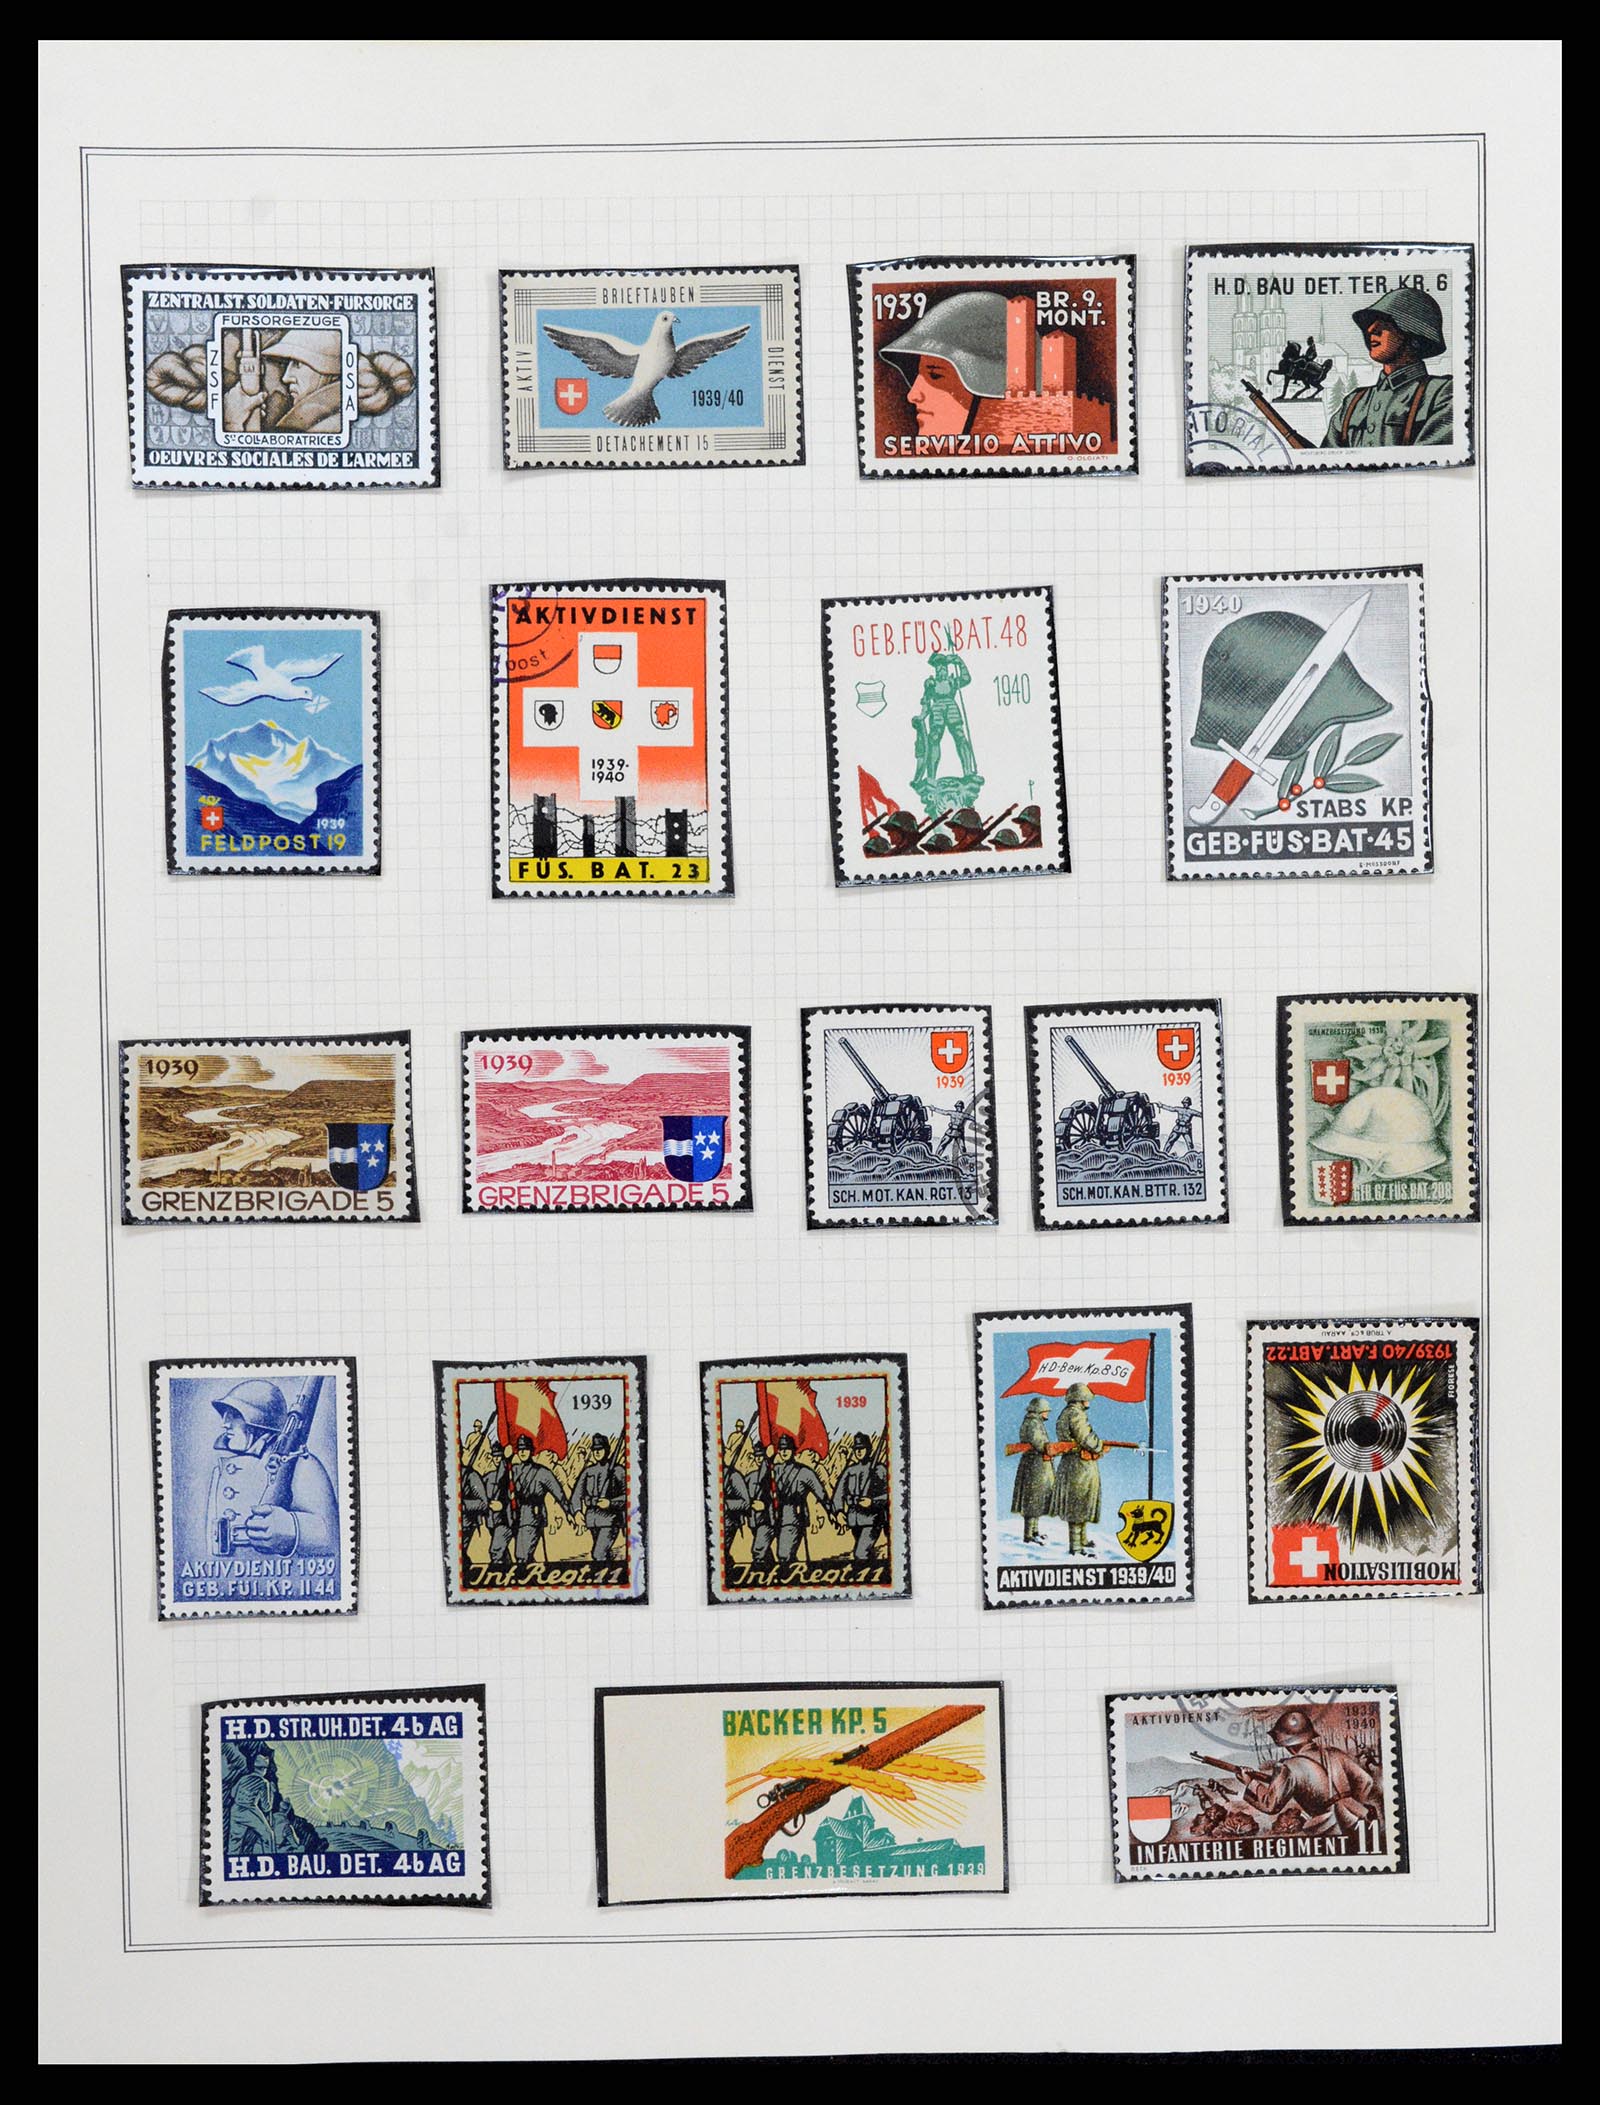 37642 053 - Stamp collection 37642 Switzerland soldier stamps 1914-1945.